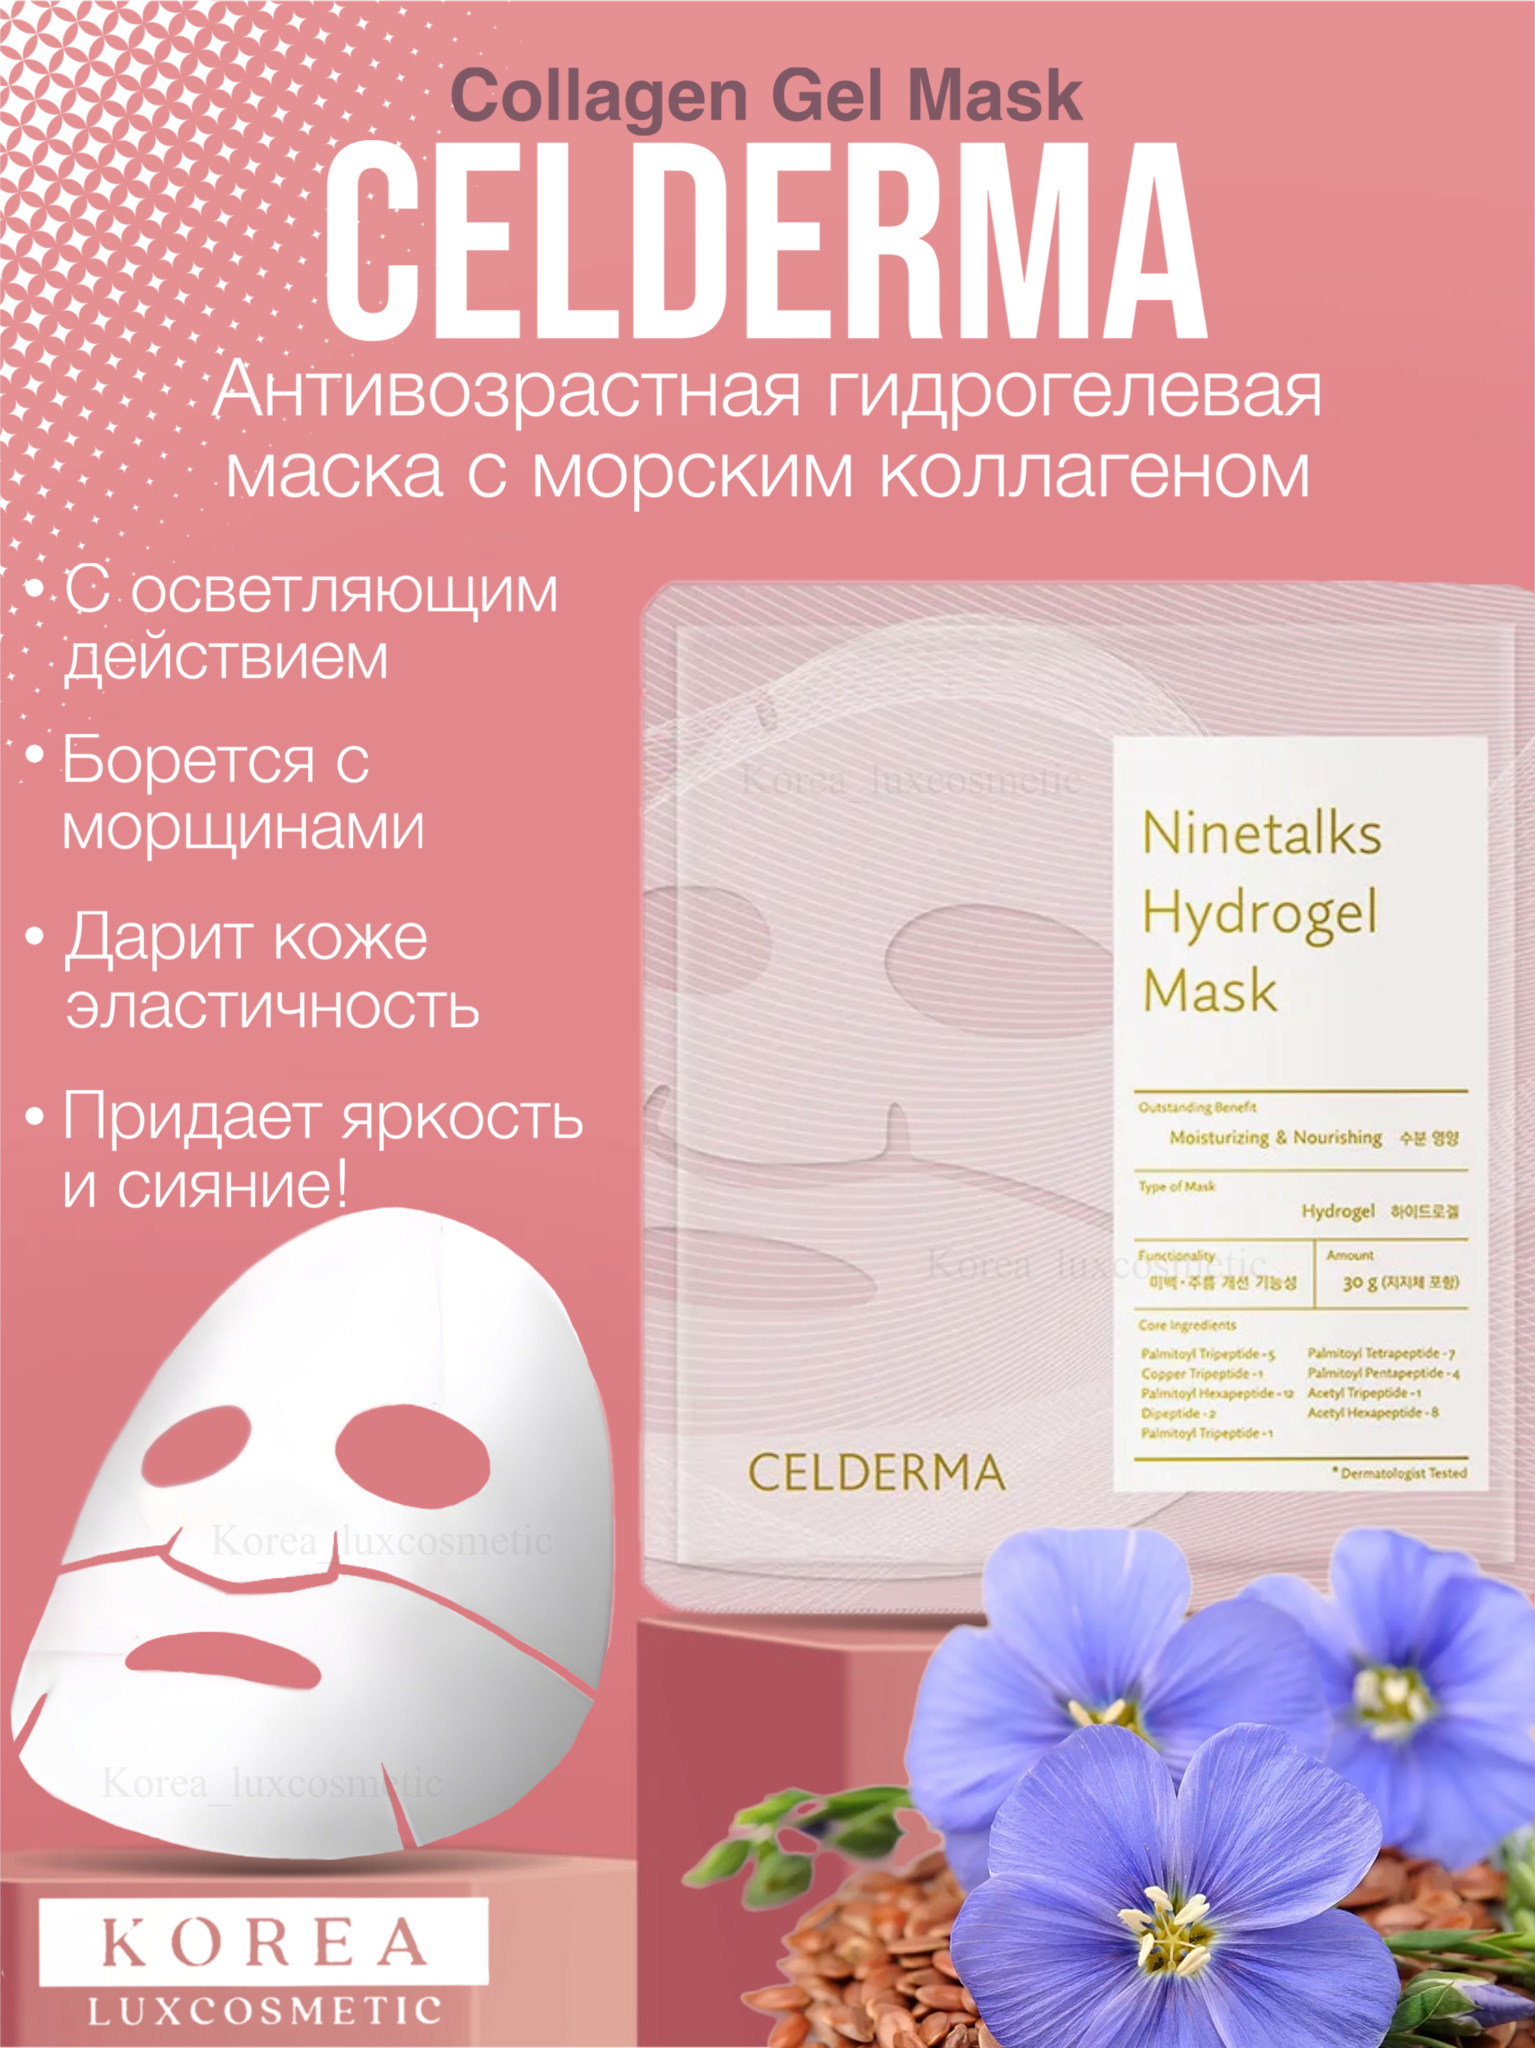 CELDERMA гидрогелевая маска с морским коллагеном против морщин Collagen Gel Mask